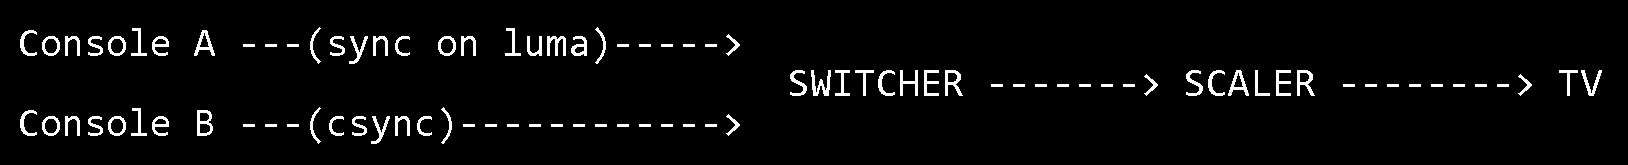 switcher_setup